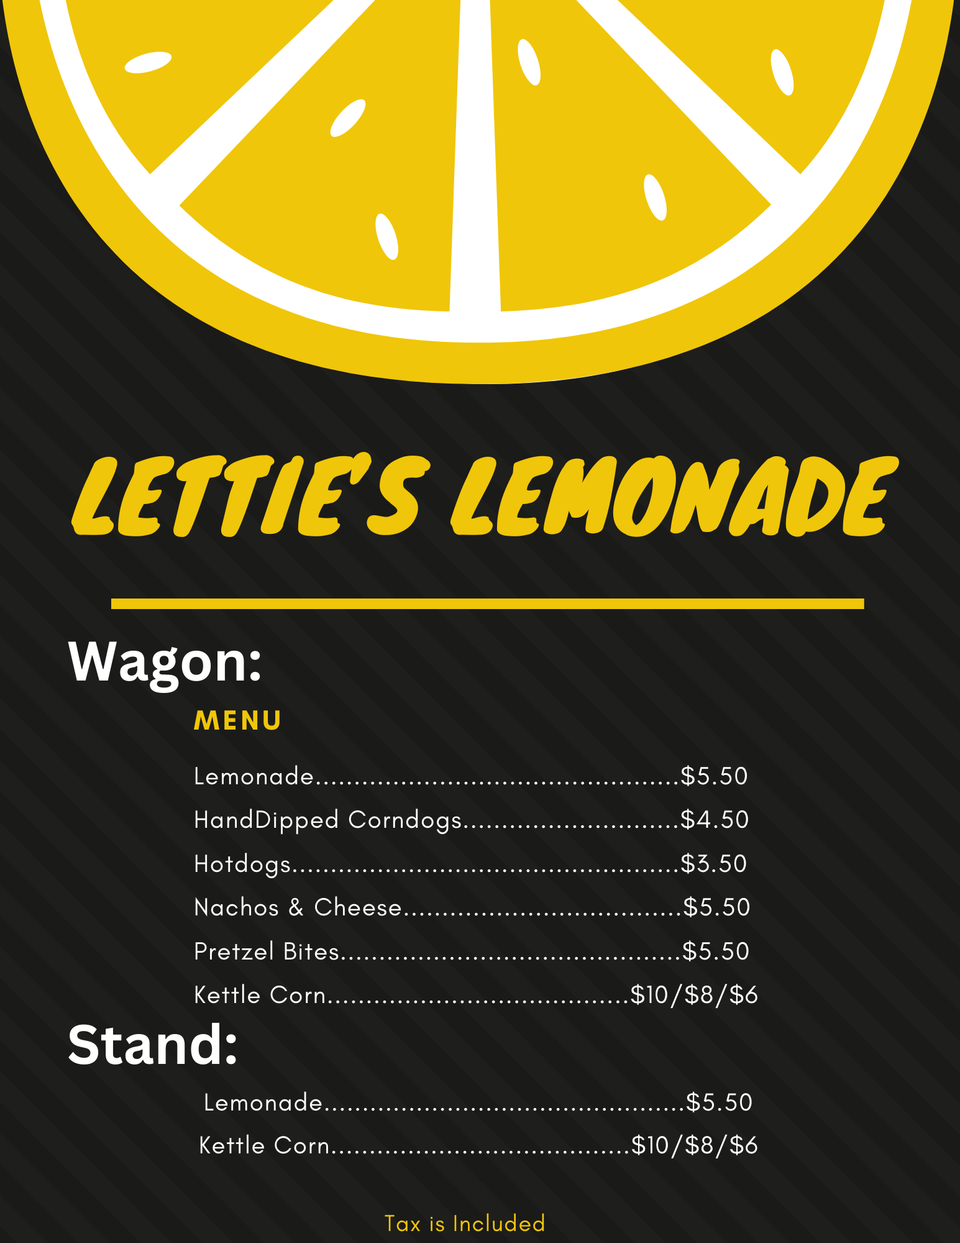 Lettie’s lemonade